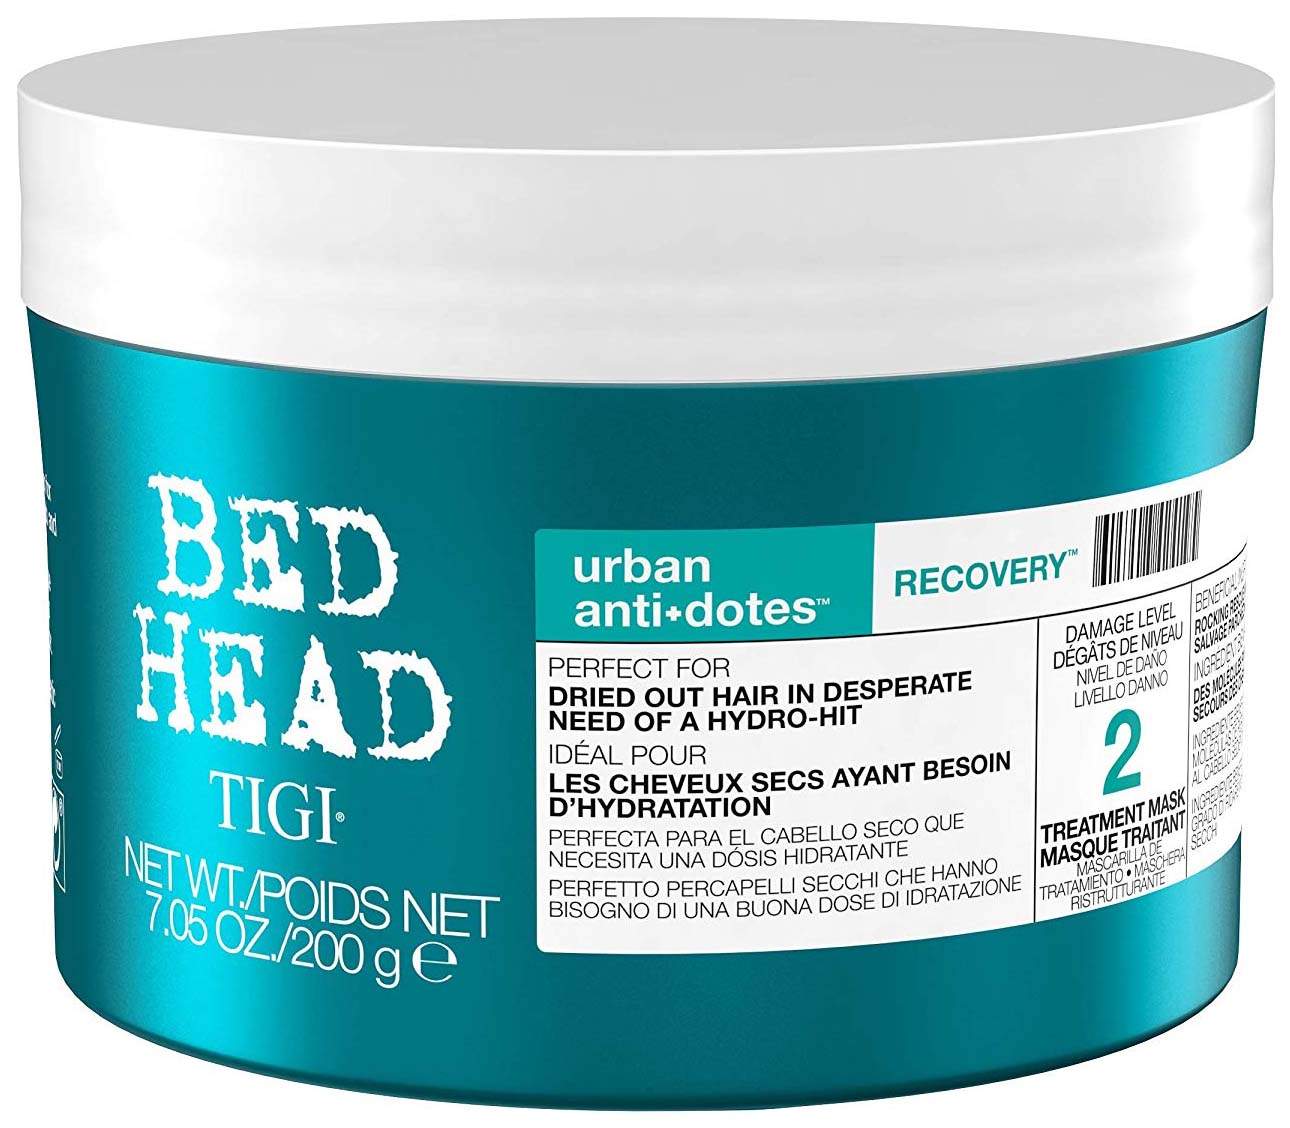 Tigi / Urban Anti+dotes Recovery Маска для поврежденных волос уровень №2 / BedHead / 200 мл.